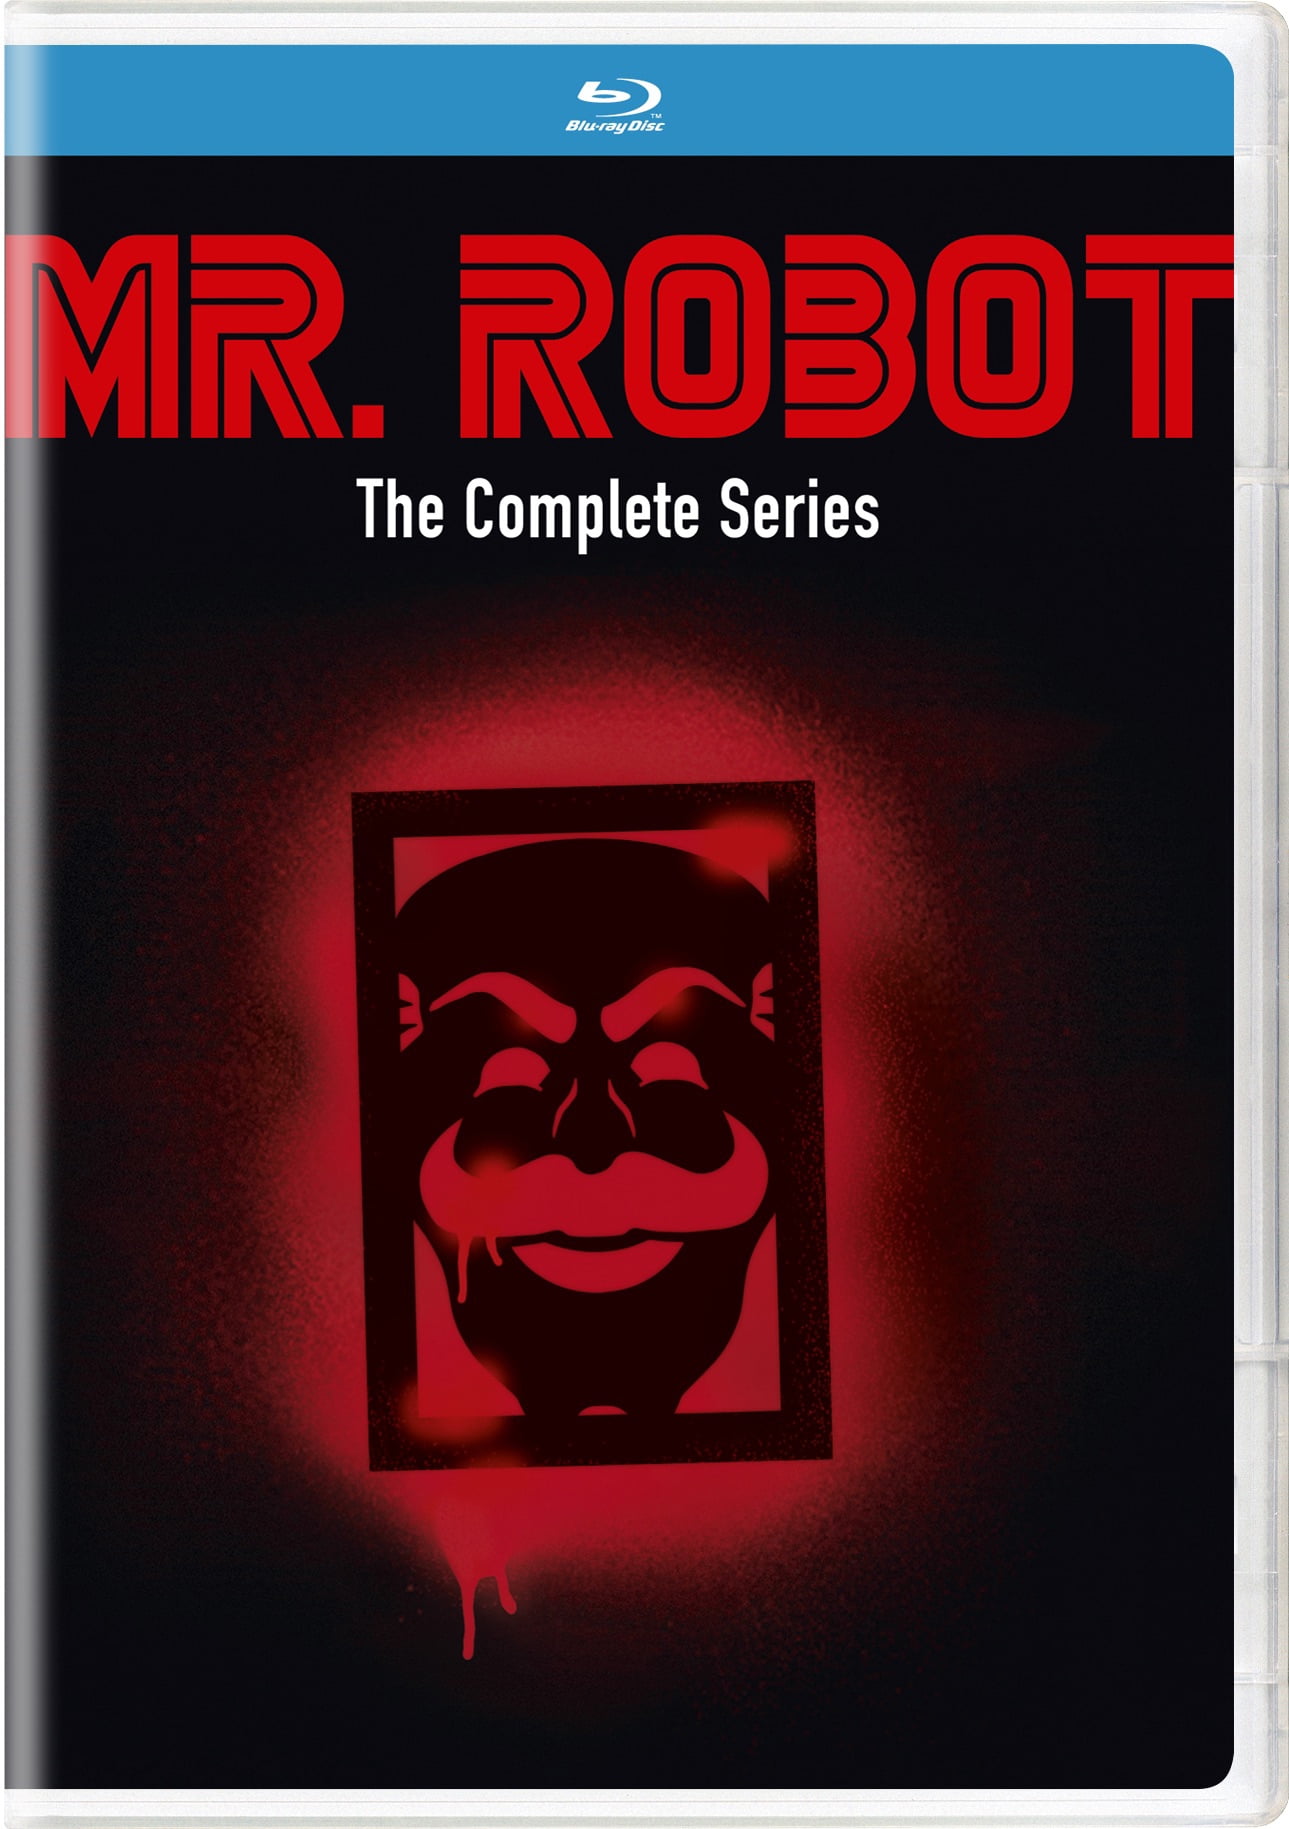 Mr. Robot Season 1 - Dreamogram